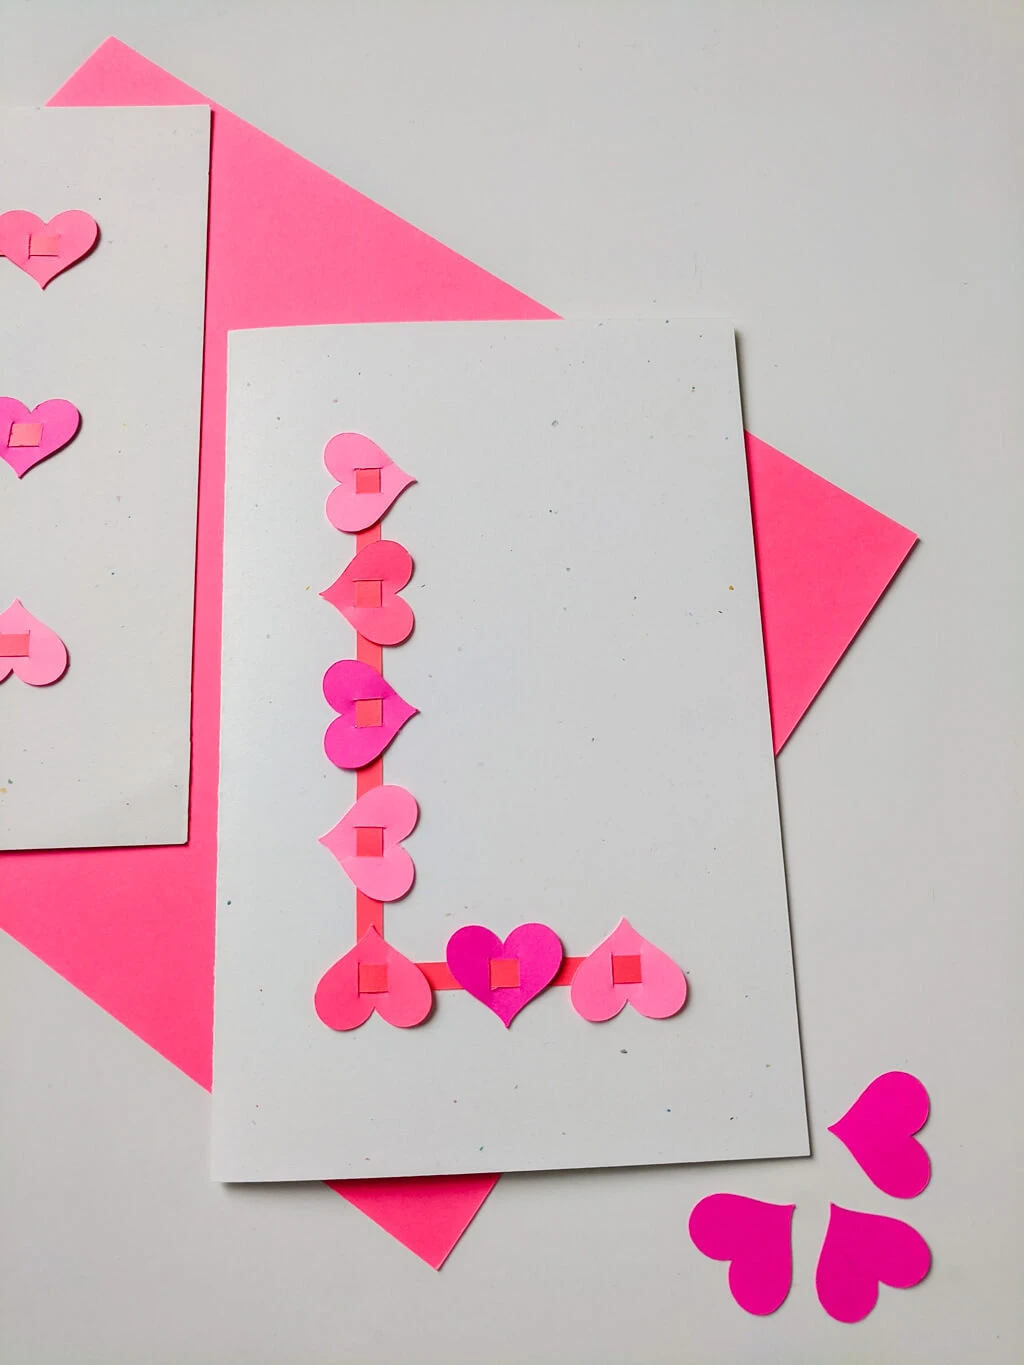 Heart Letter L handmade Valentine's Day card or valentines artwork